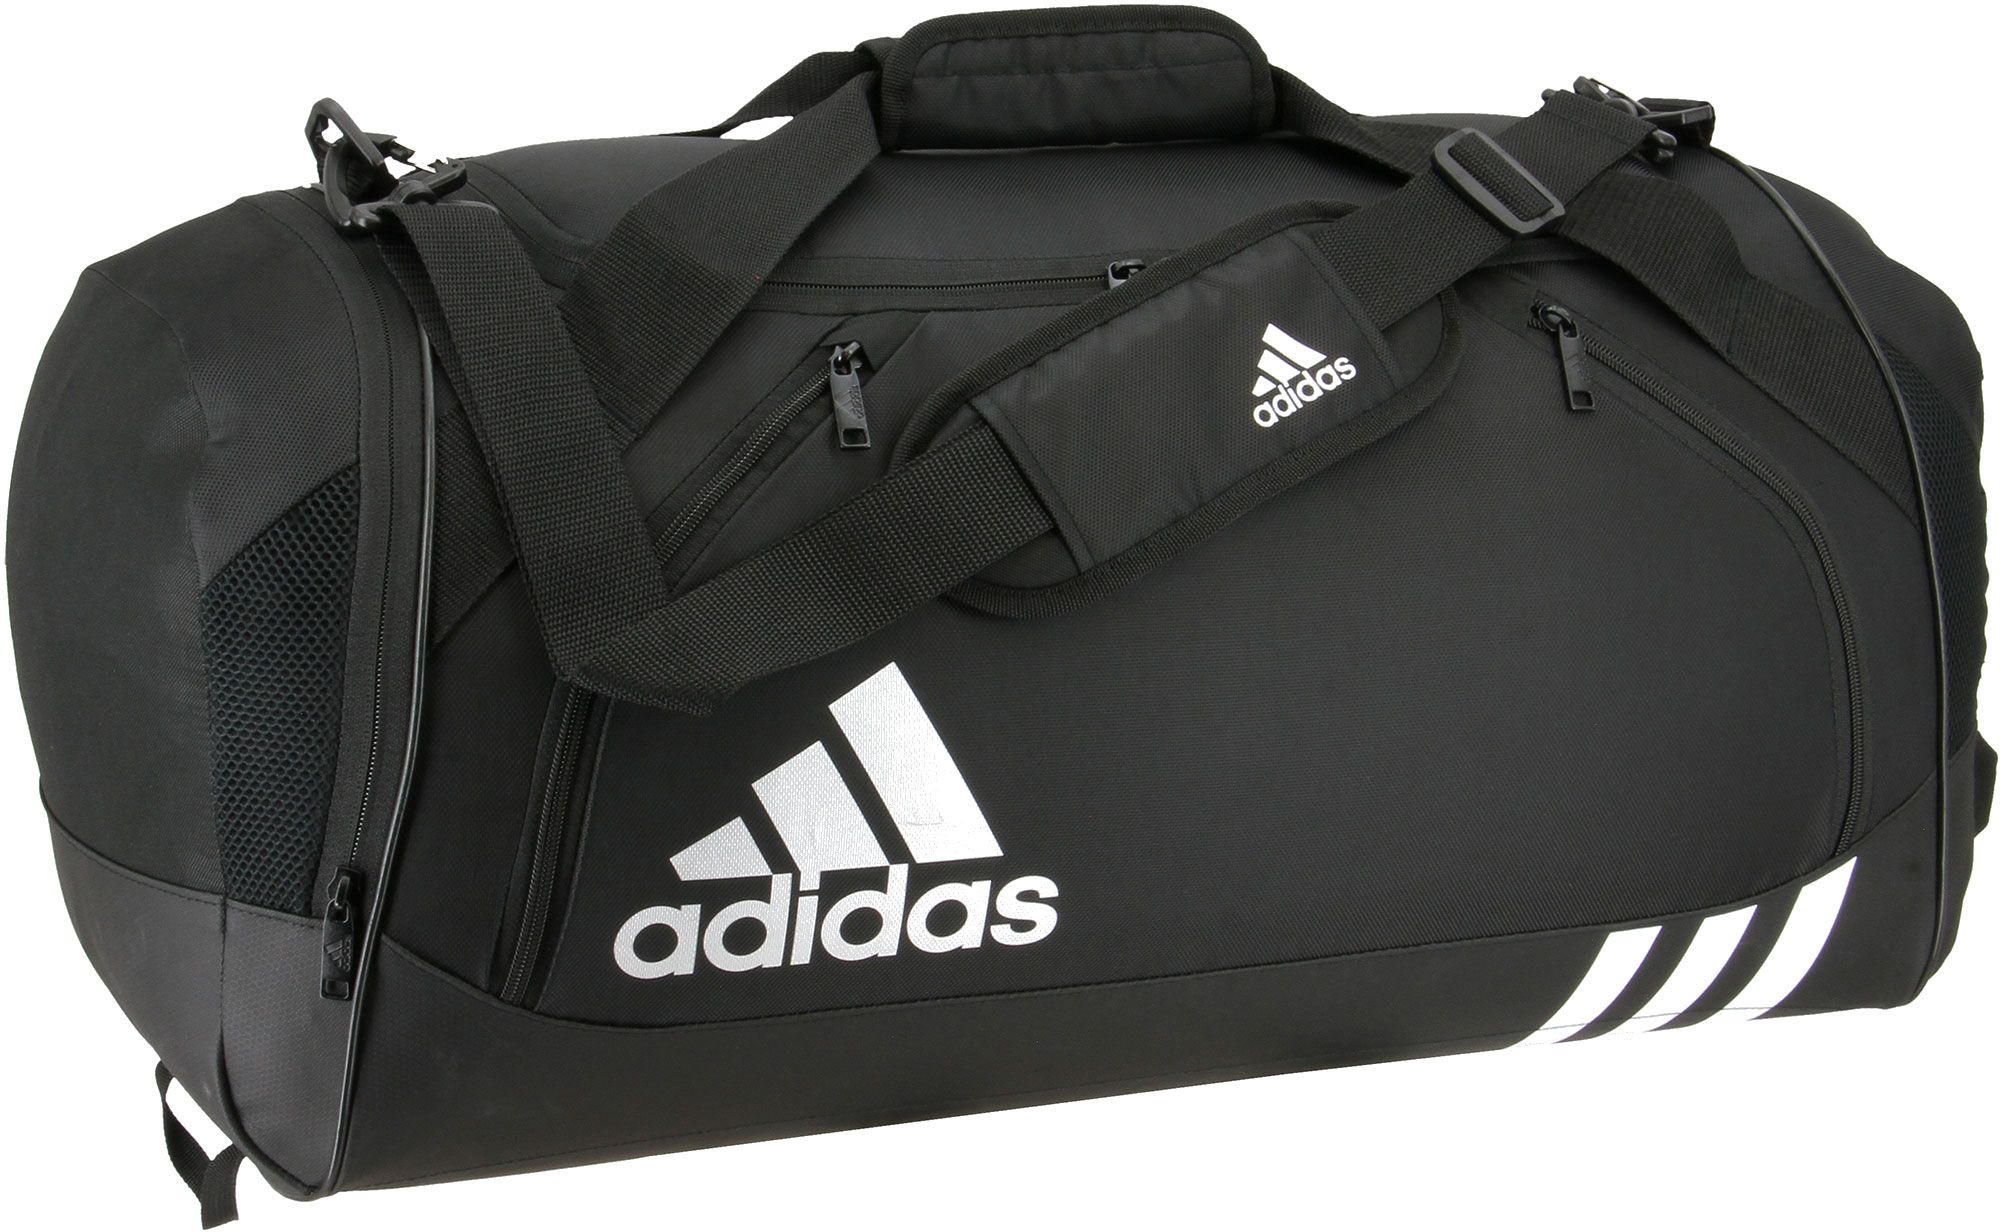 adidas gym bag large